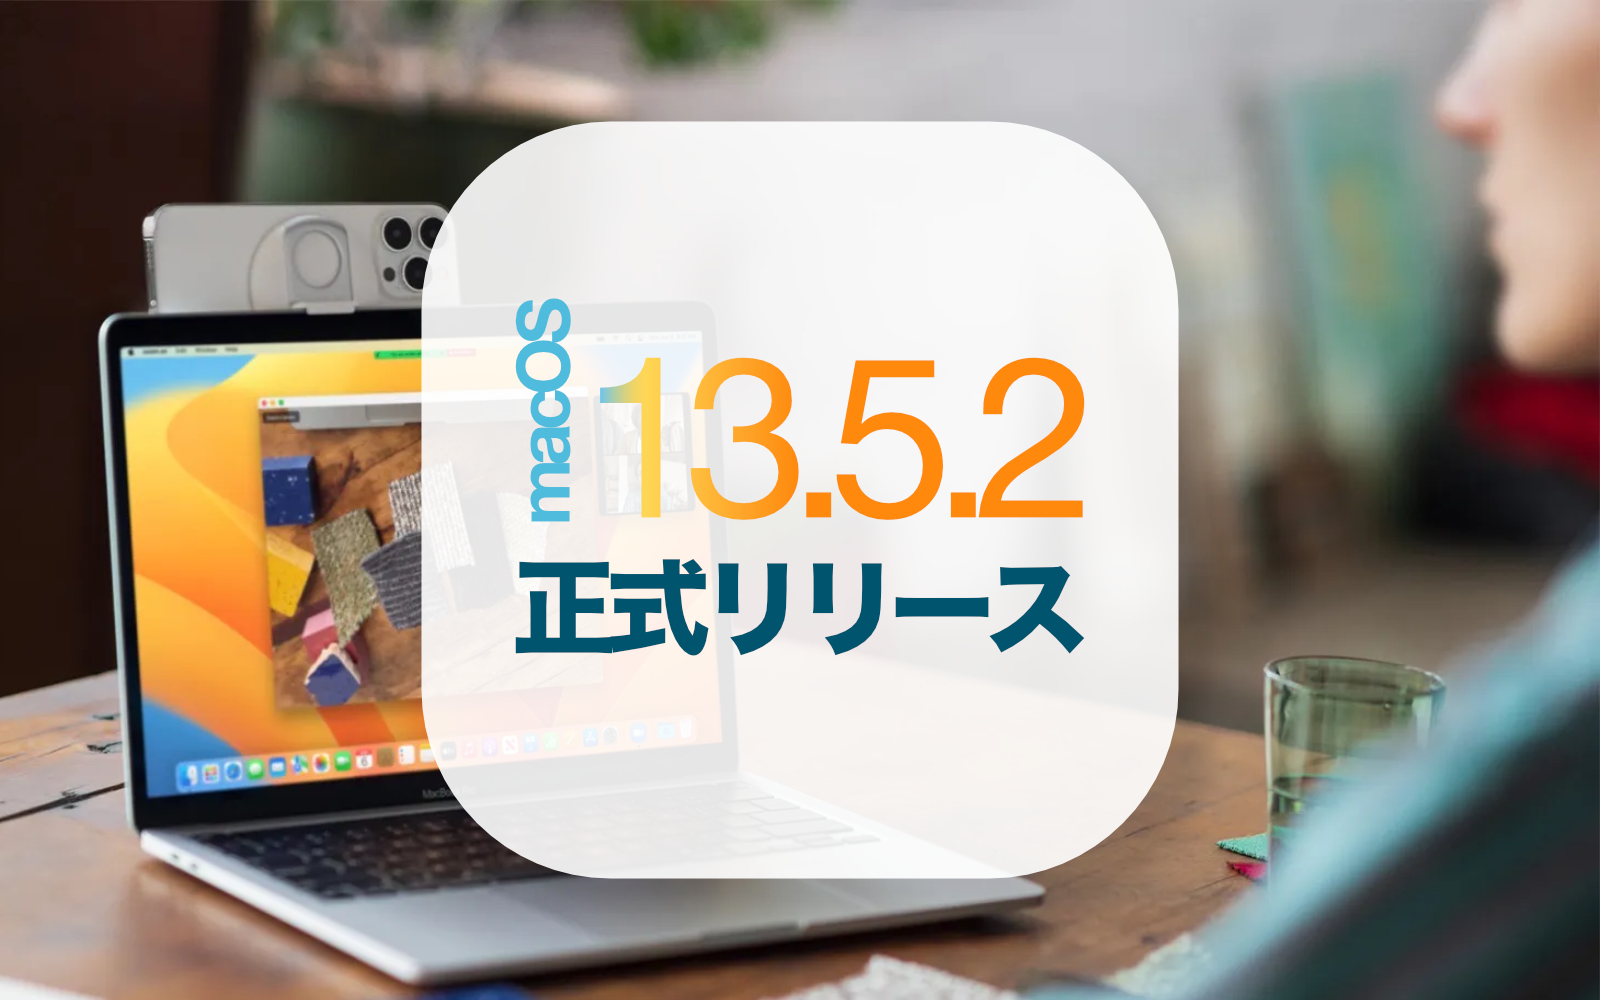 MacOS13 5 2 Ventura official release